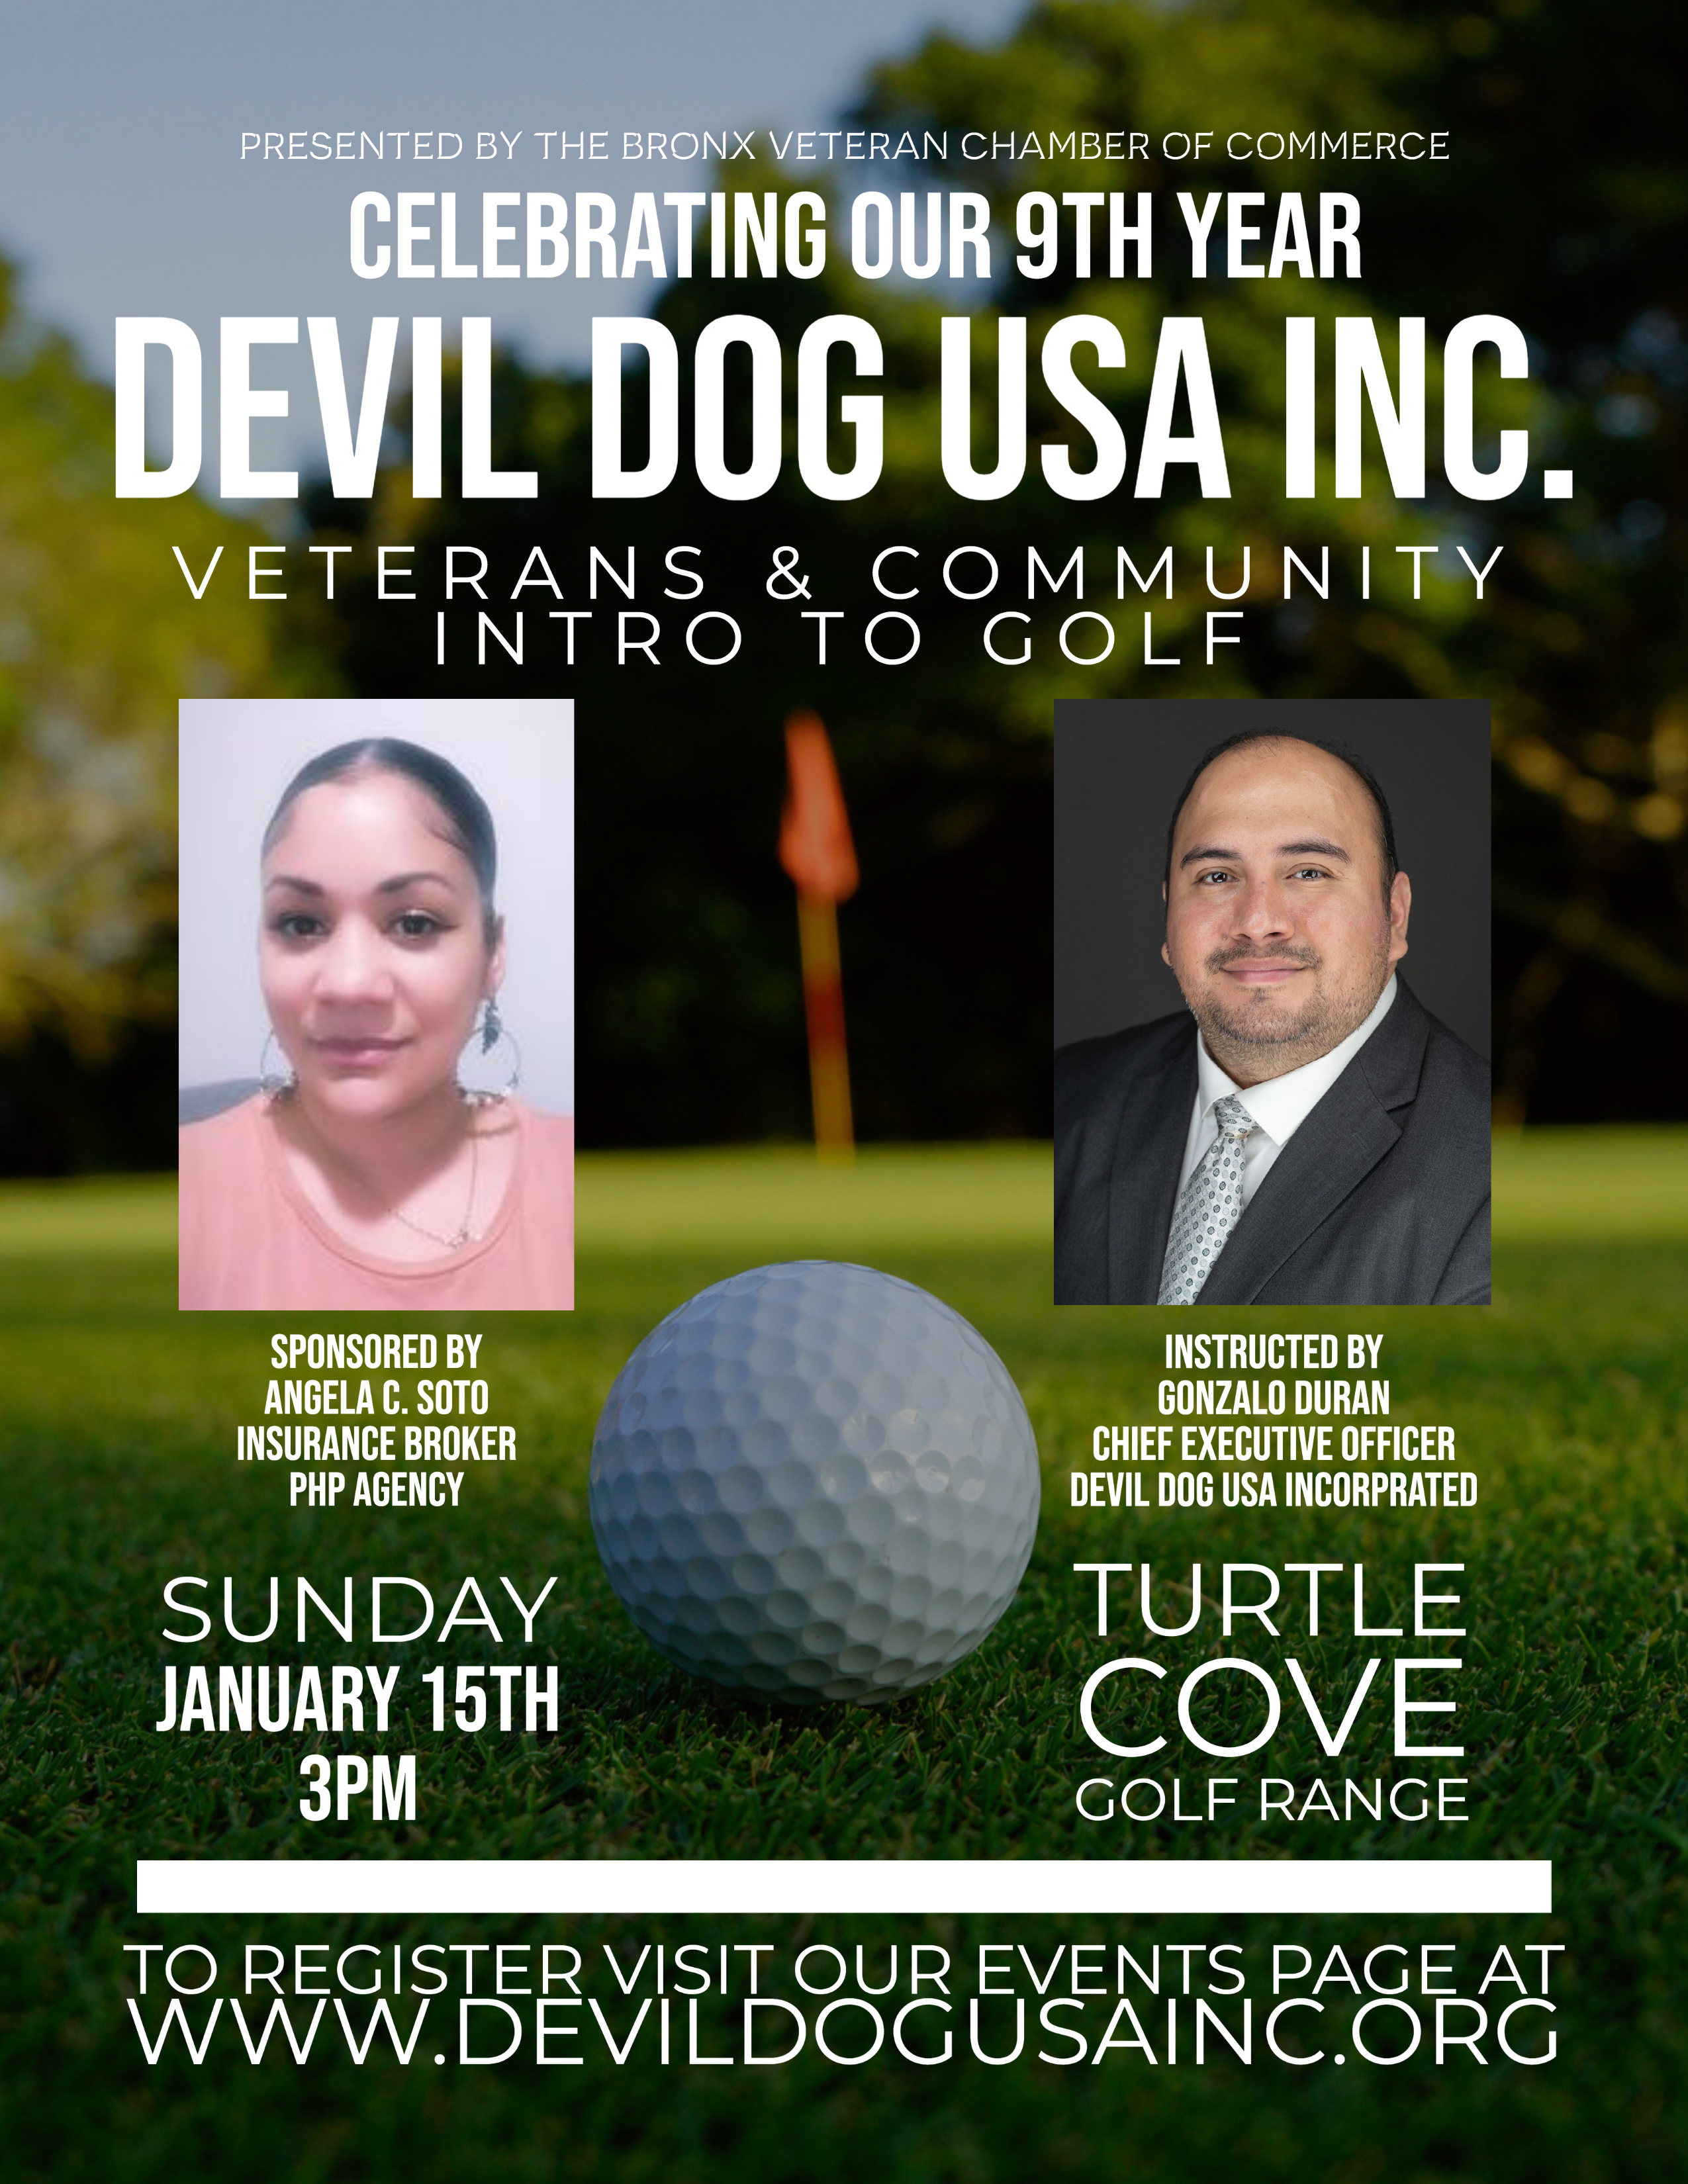 Devil Dog USA Inc.: Veteran & Community Intro To Golf